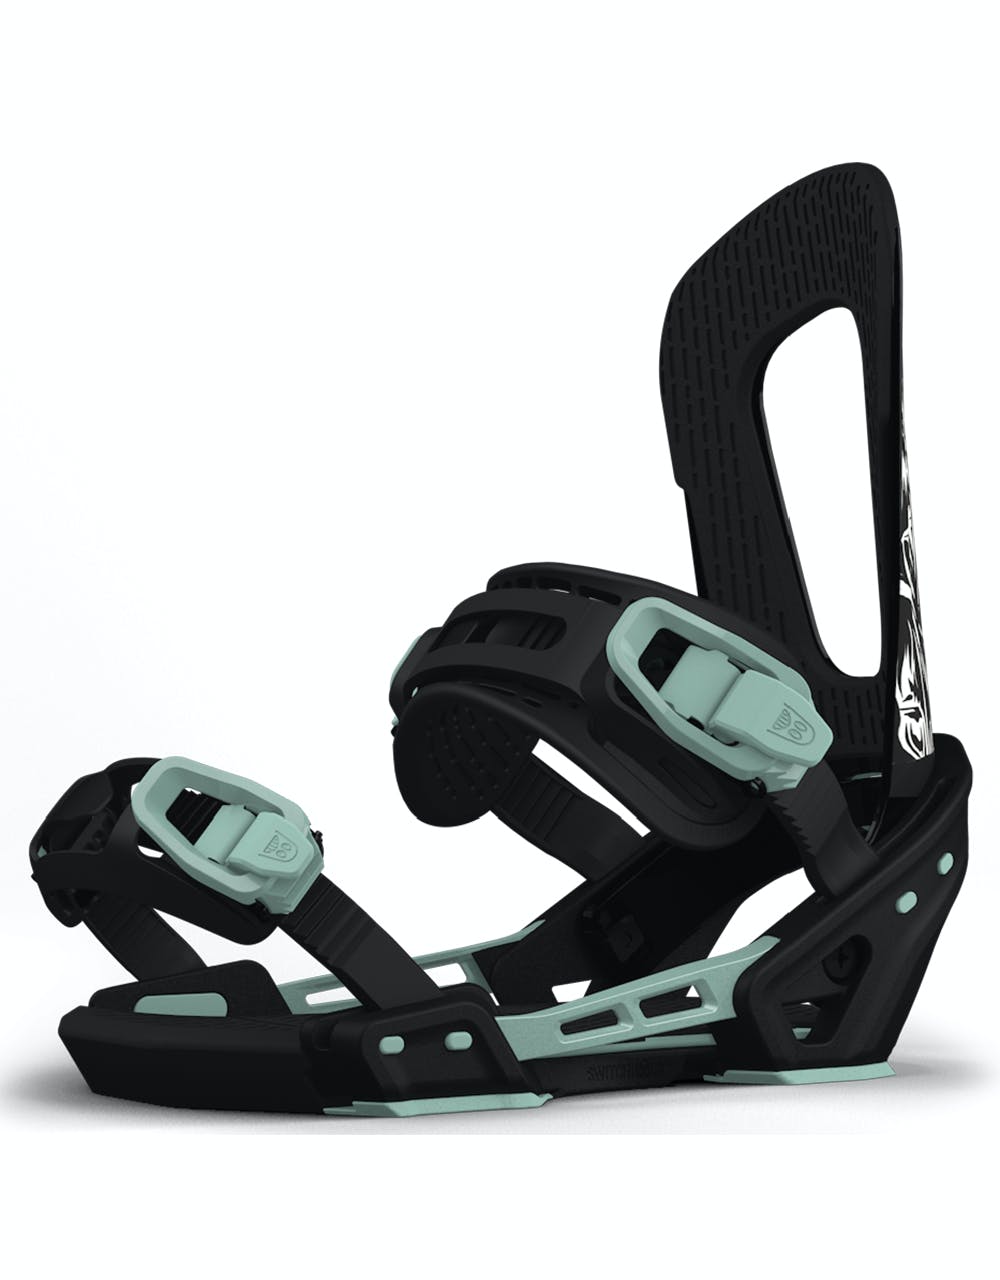 Switchback Eiki Pro Snowboard Bindings - Black/White/Mint